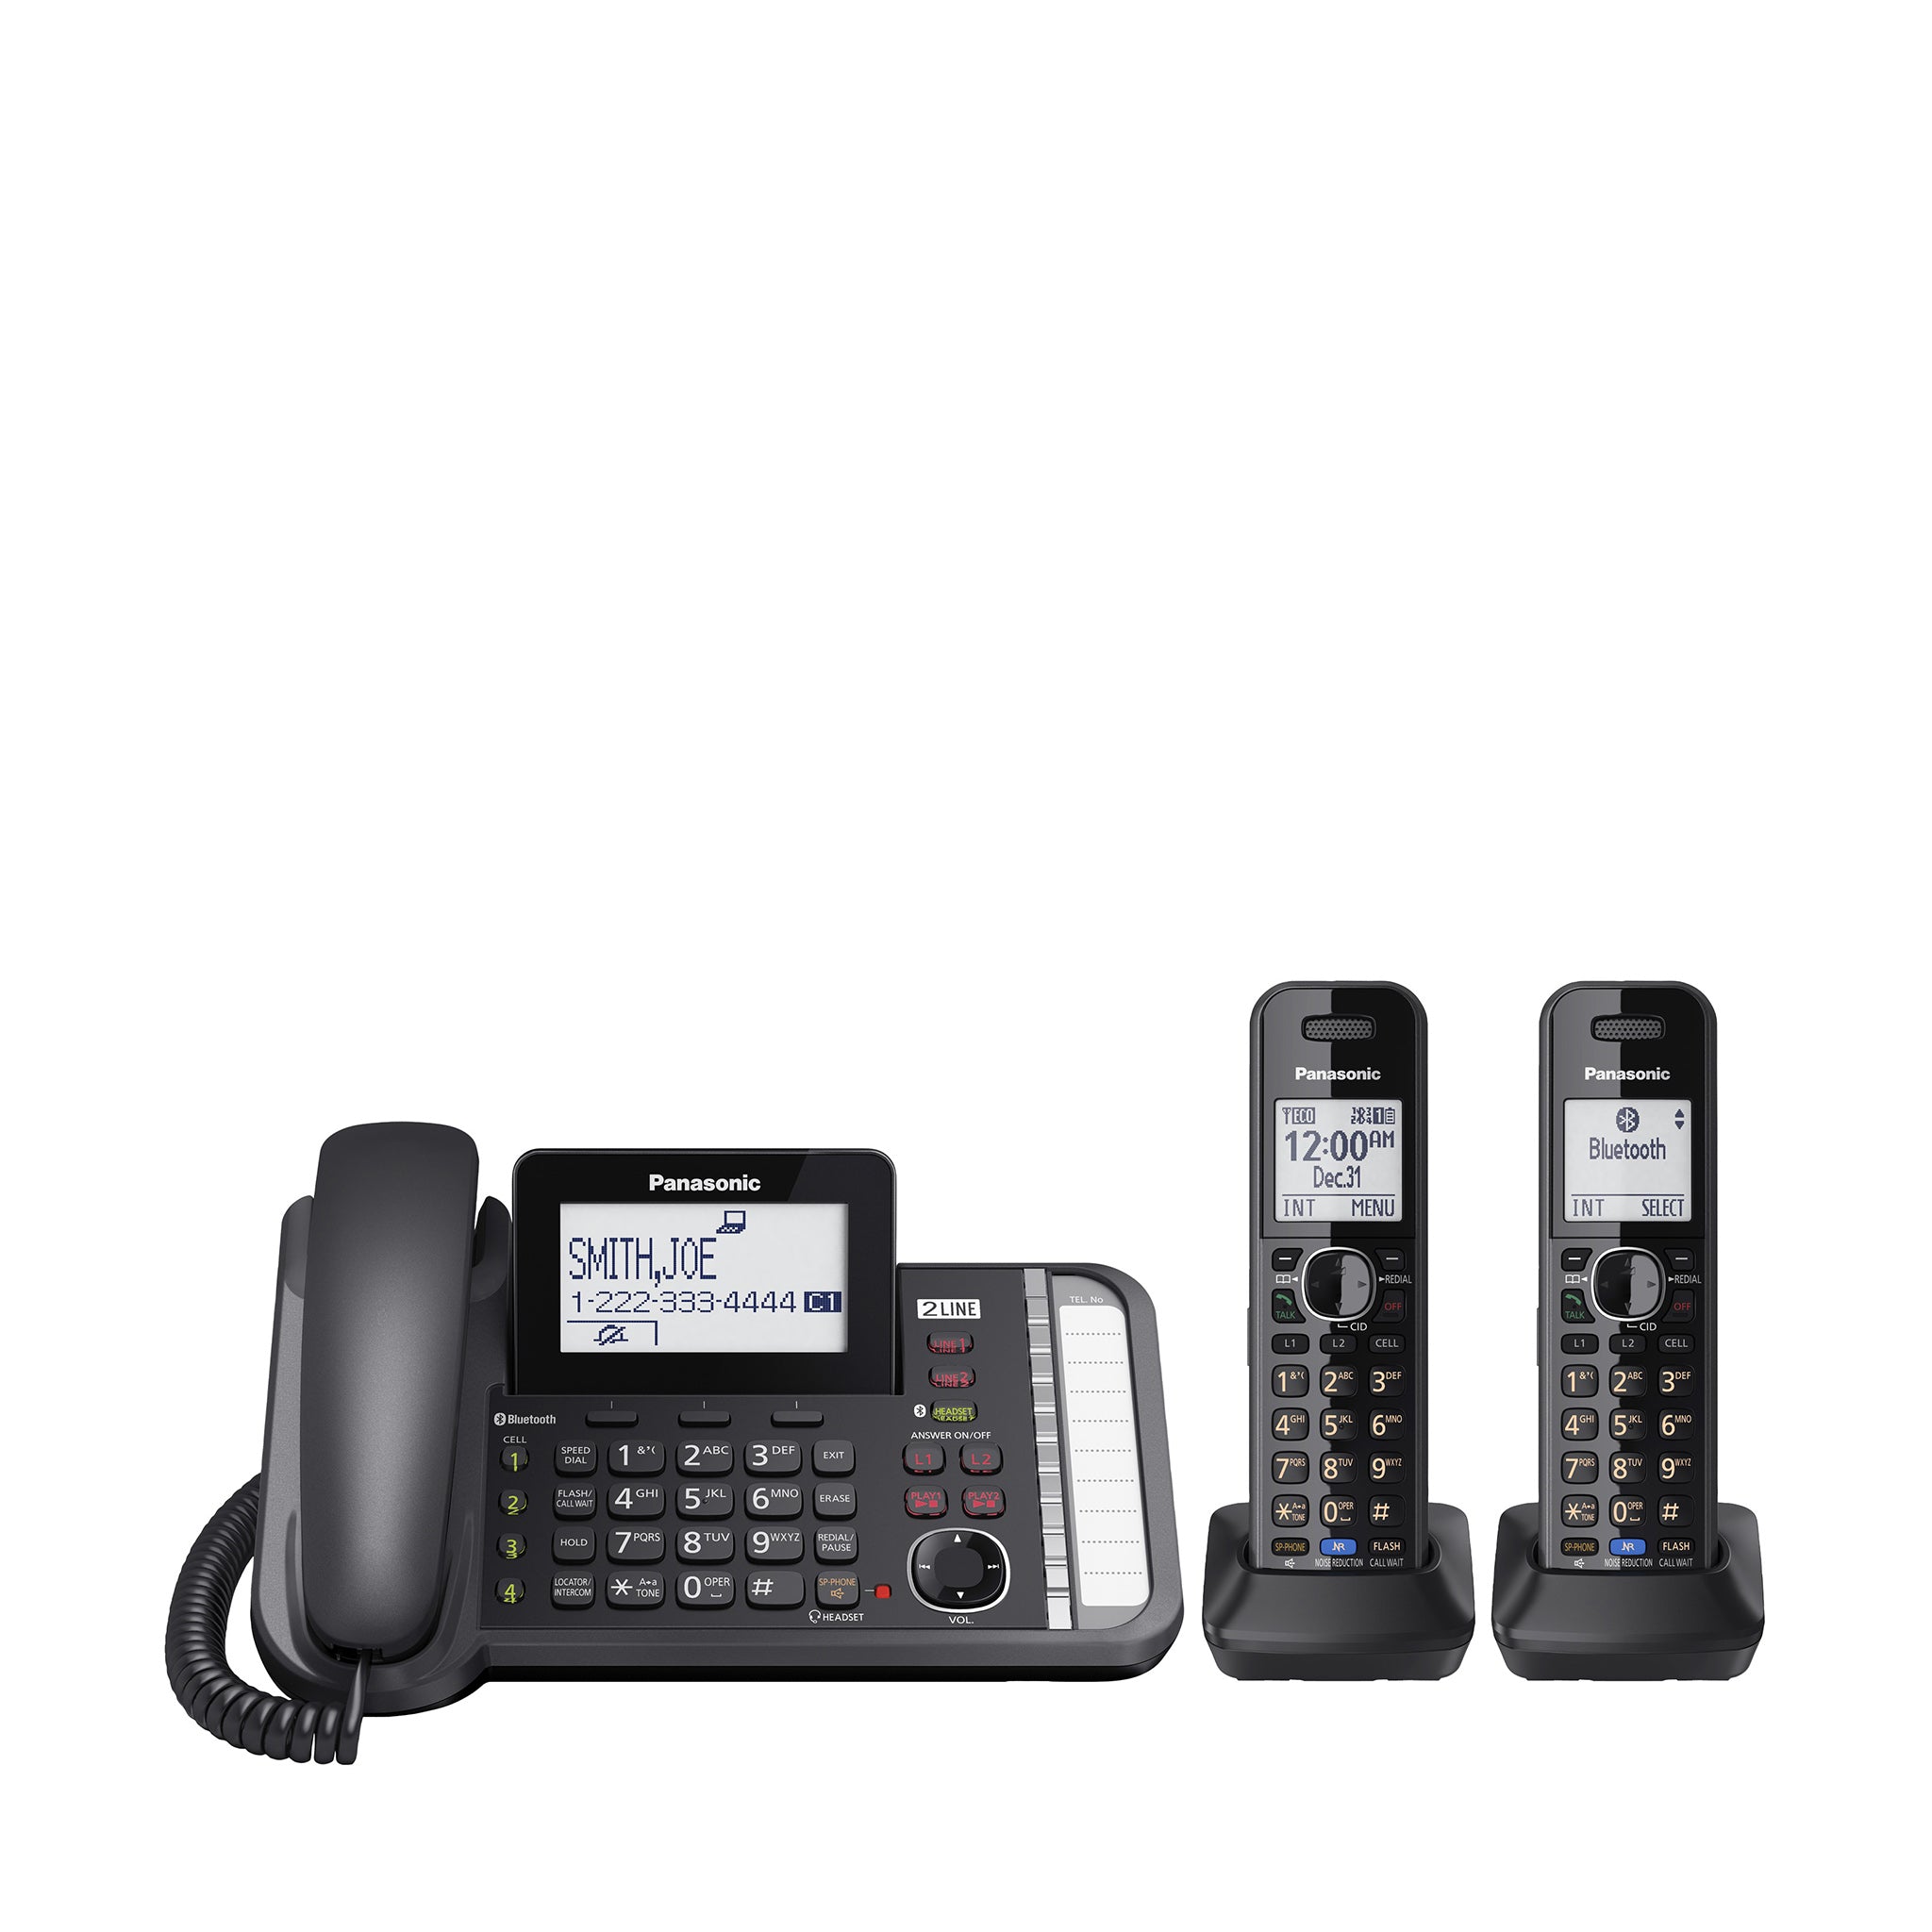 Panasonic Cordless Phone with Answering Machine, Advanced Call